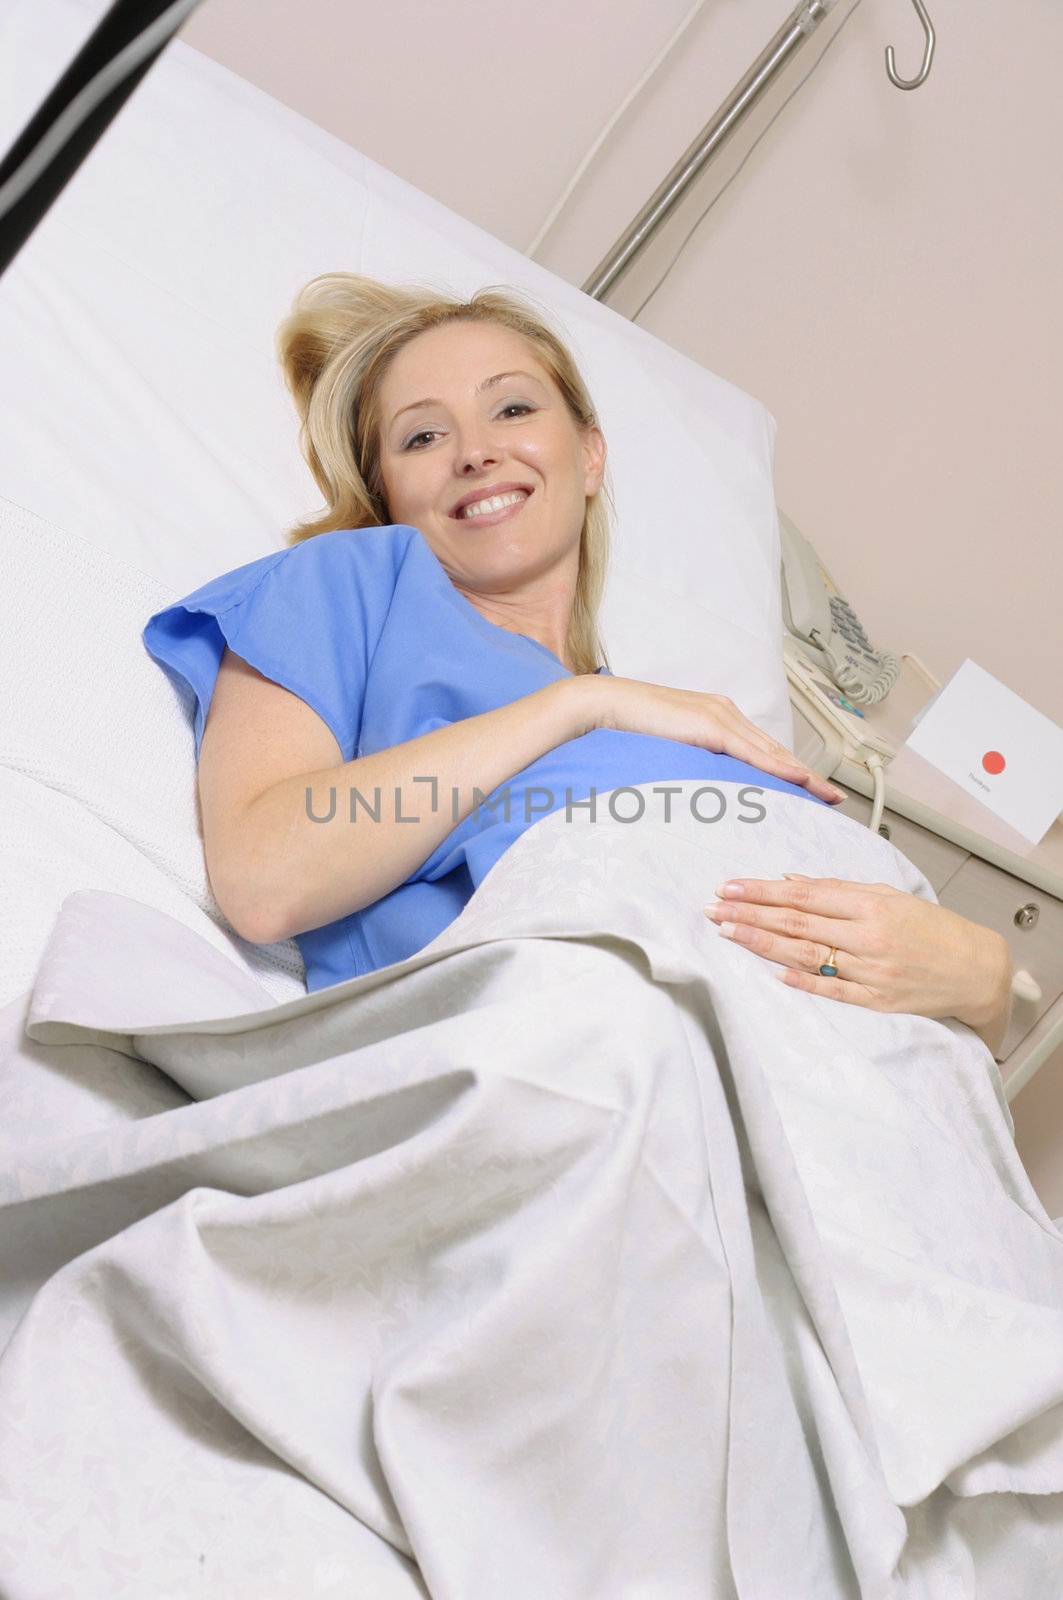 Maternity Ward by lovleah